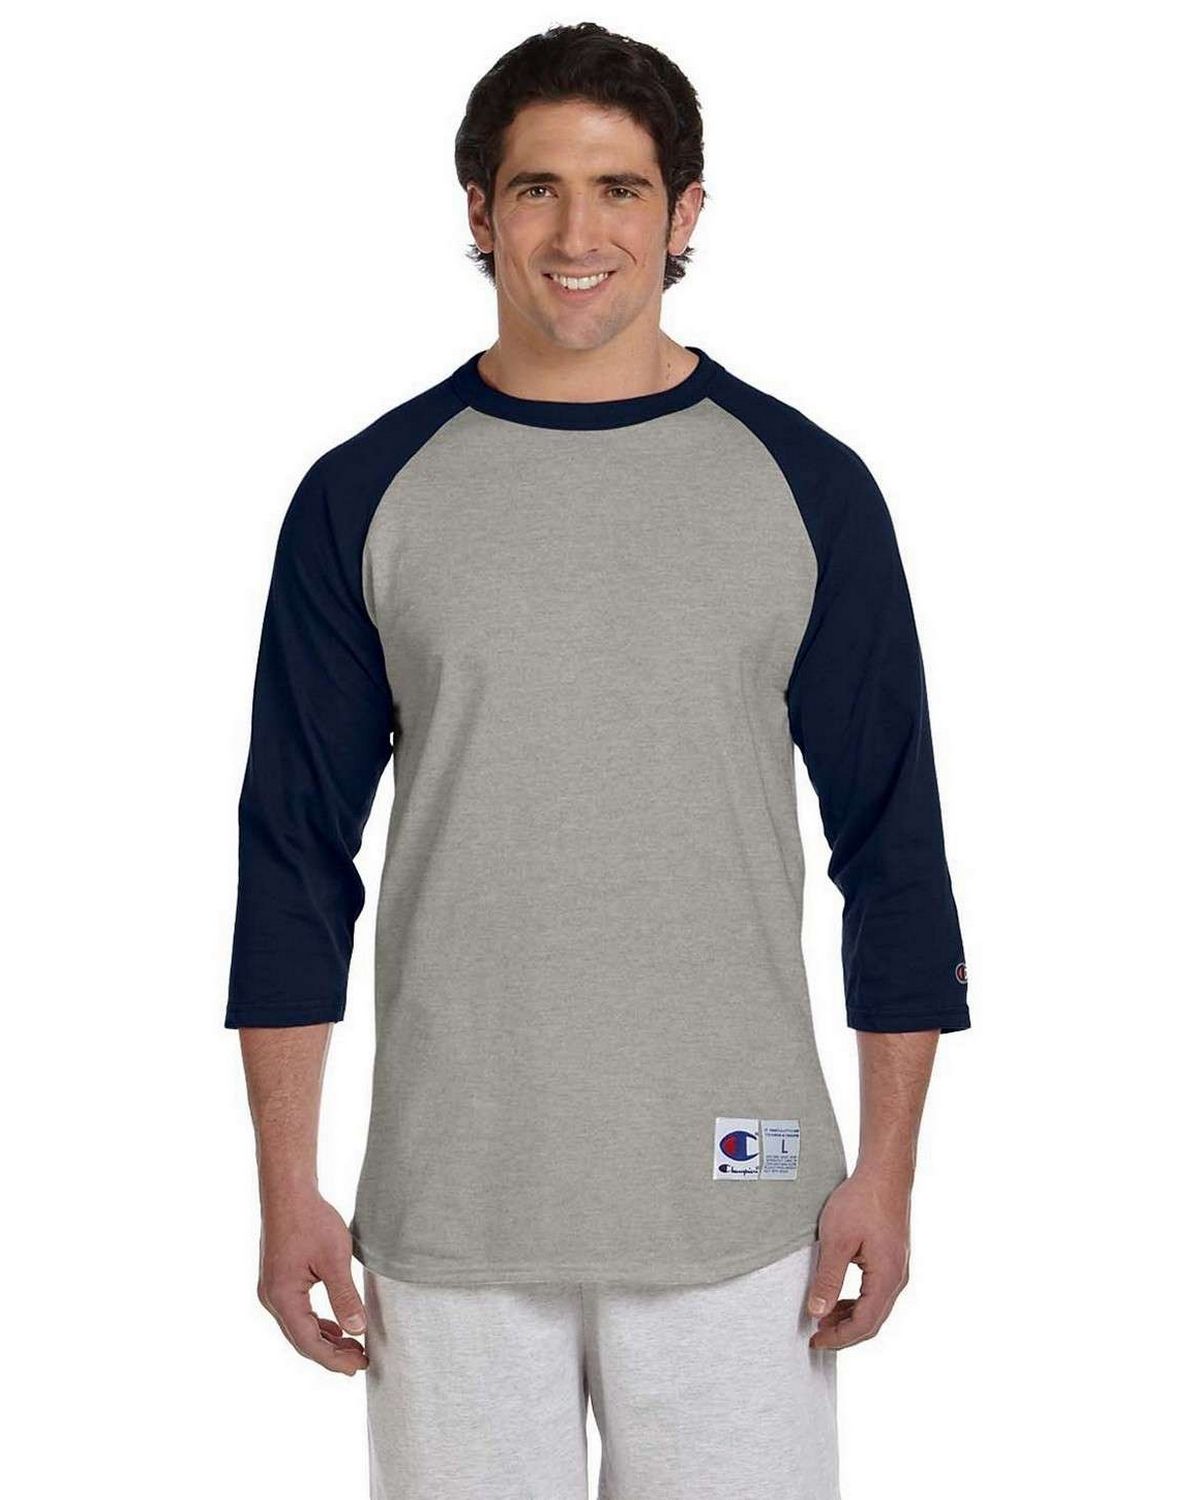 Champion Mens Tagless Raglan Baseball T-Shirt Oxford Grey/Navy 2XL